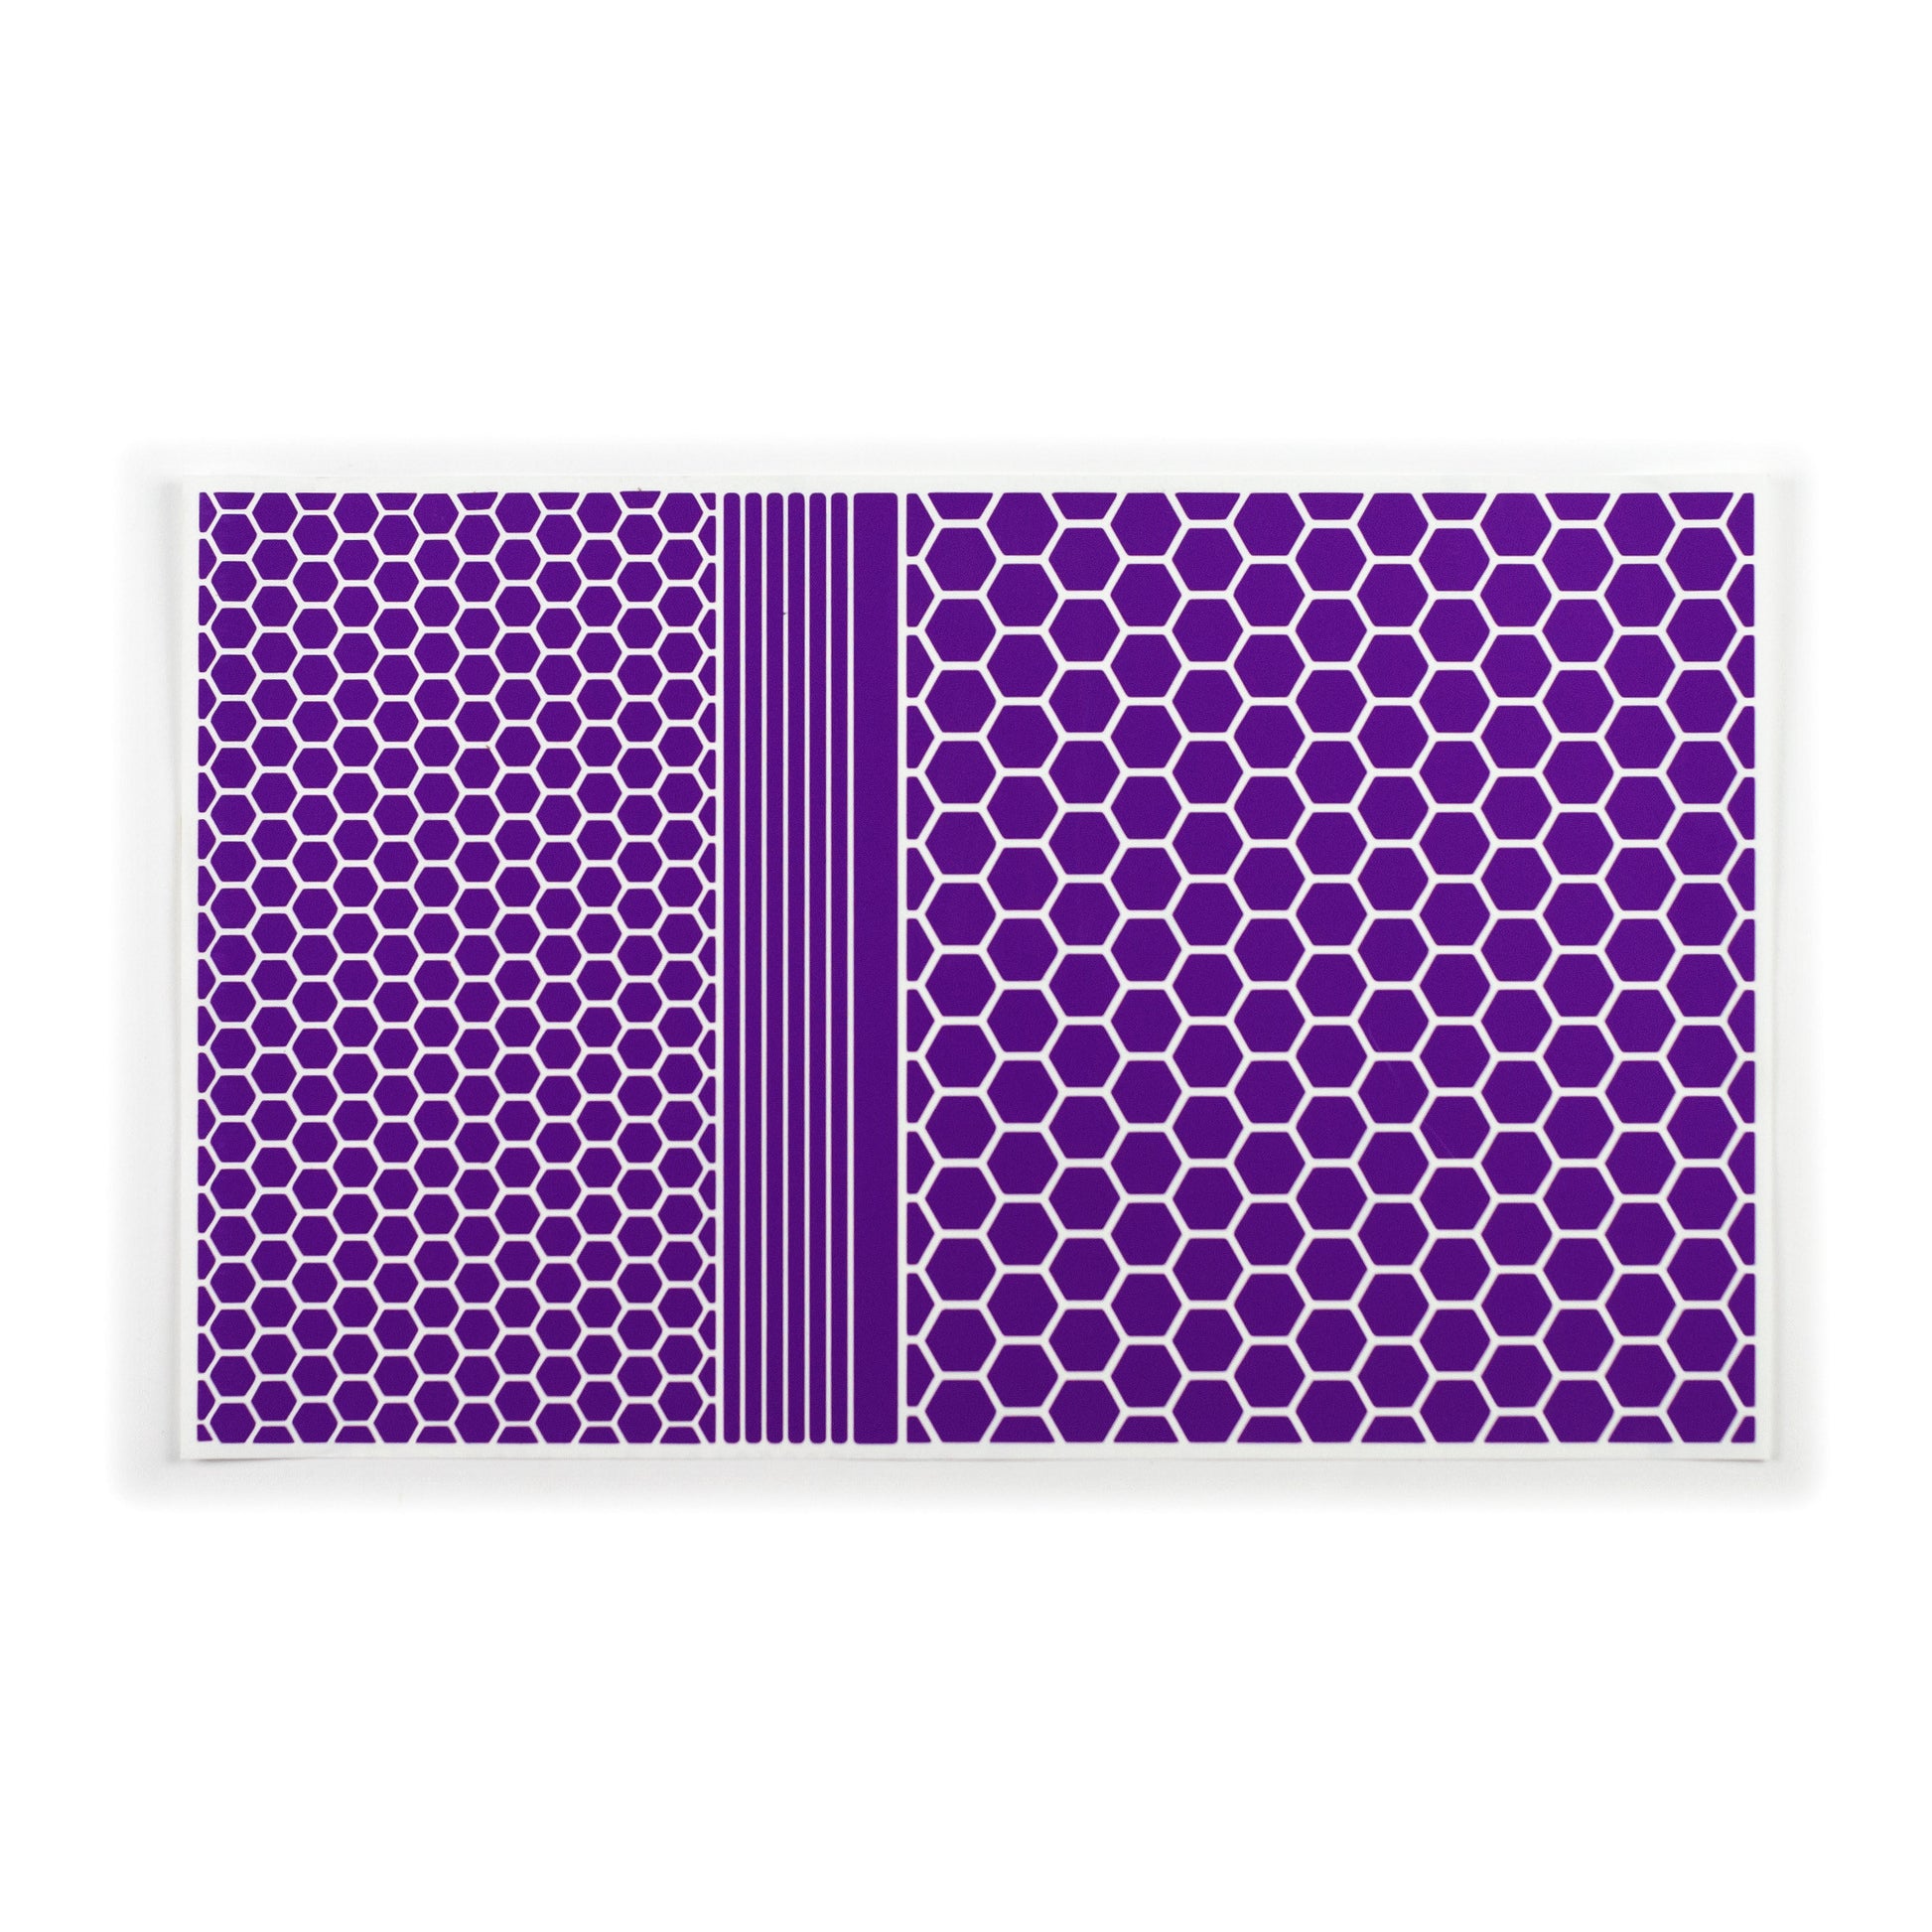 RydeSafe Reflective Stickers | Hexagon+ Kit - XL